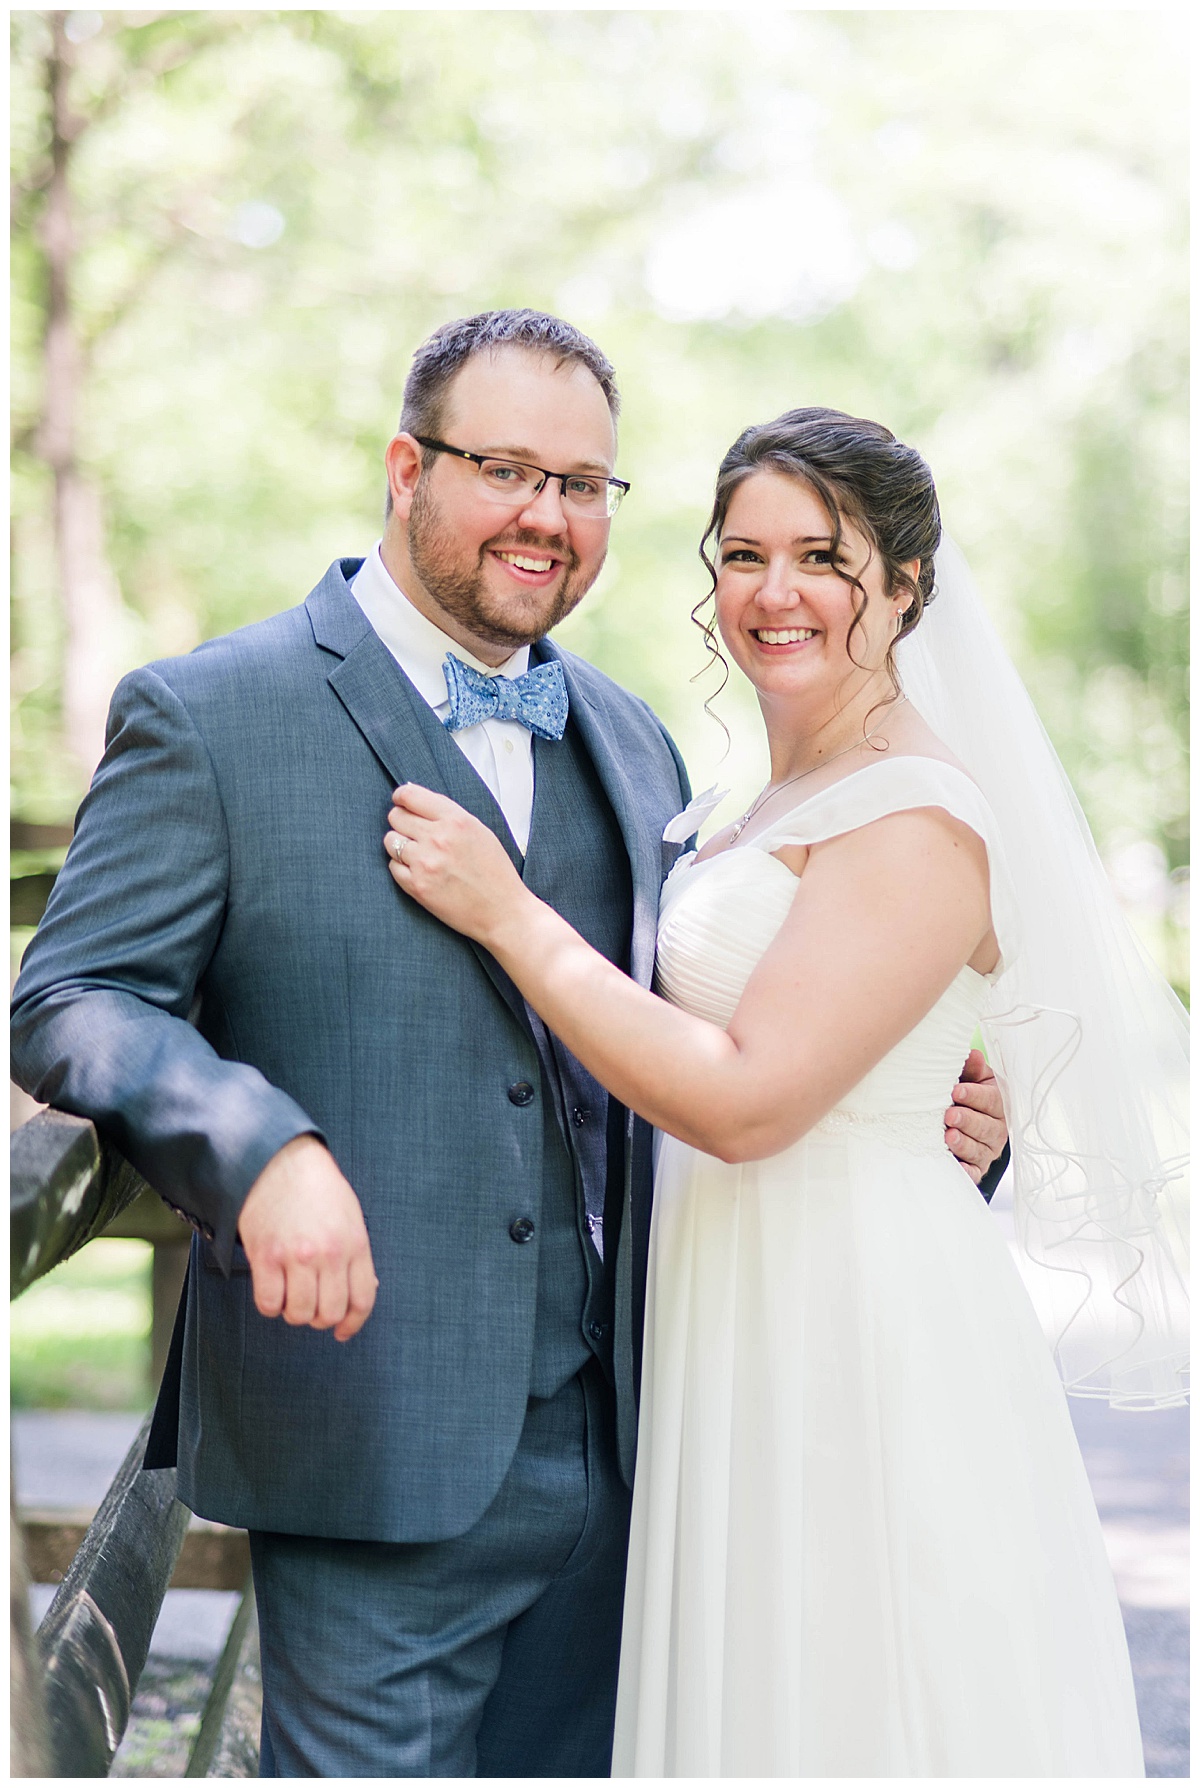 DC Church Wedding: bride and groom formal portrait, outdoors, veil, blue bowtie, blue suit, formal wear, sweetheart gowns wedding dress